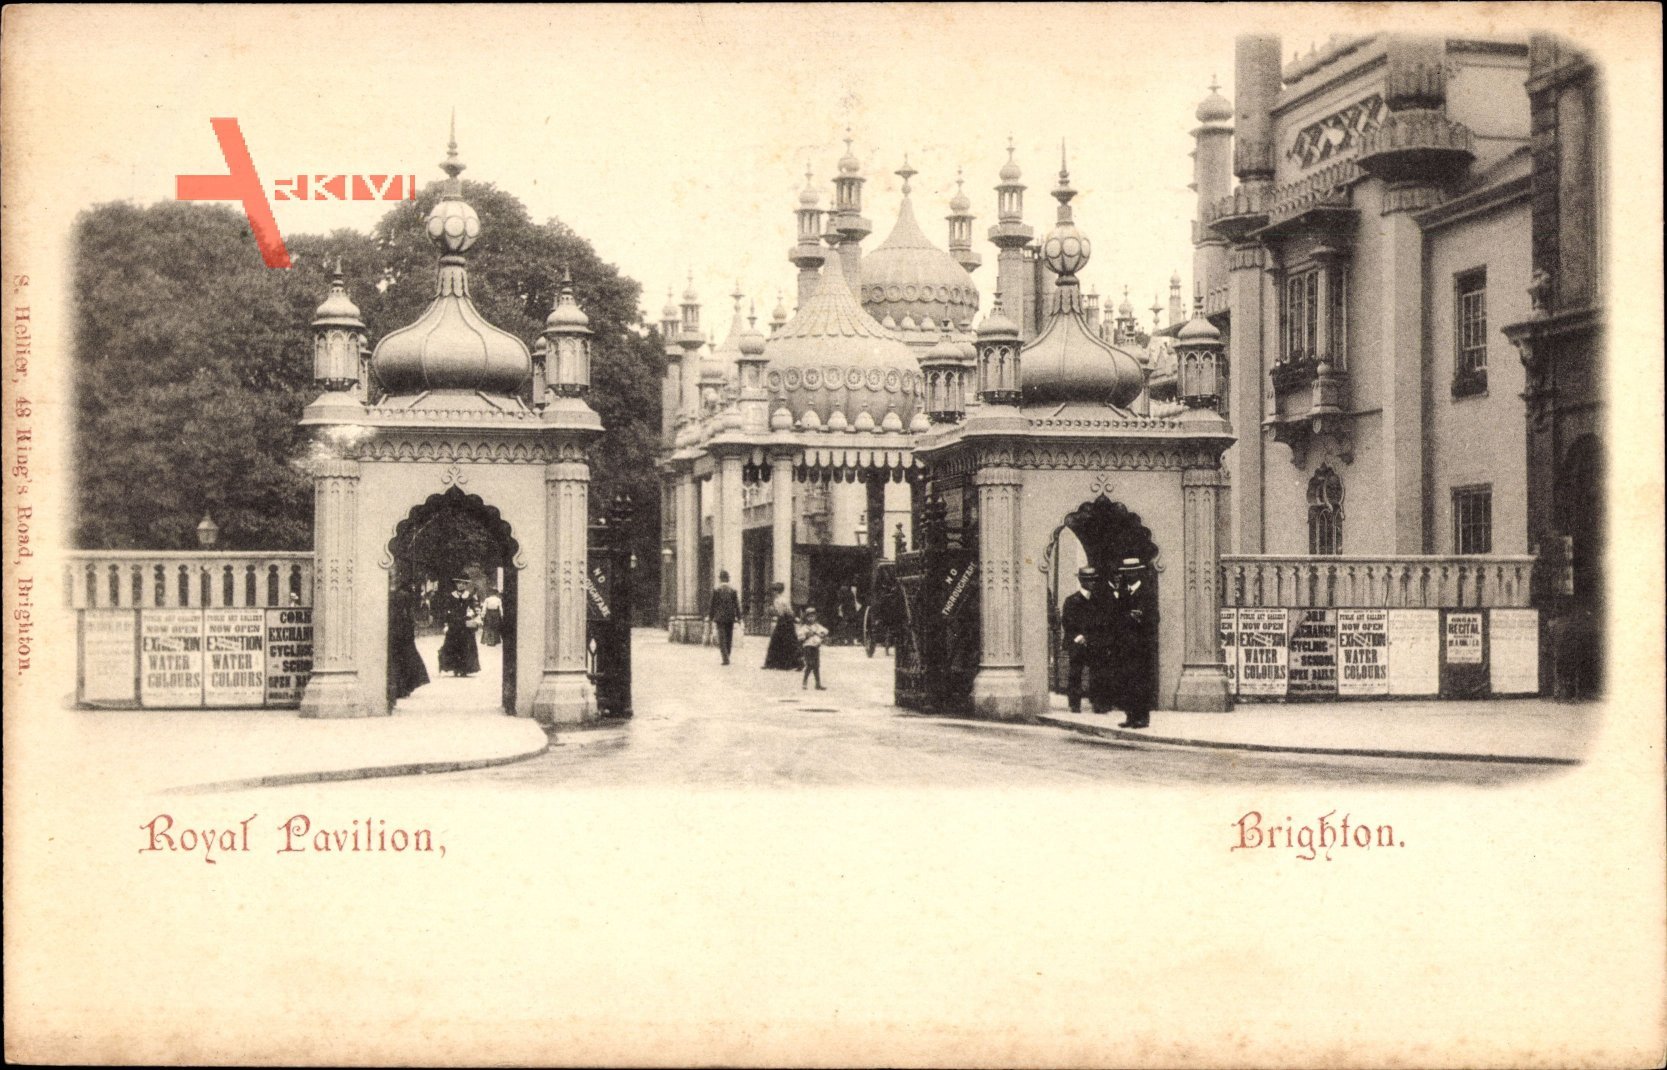 Brighton South East England, Royal Pavilion, Zwiebeltürme